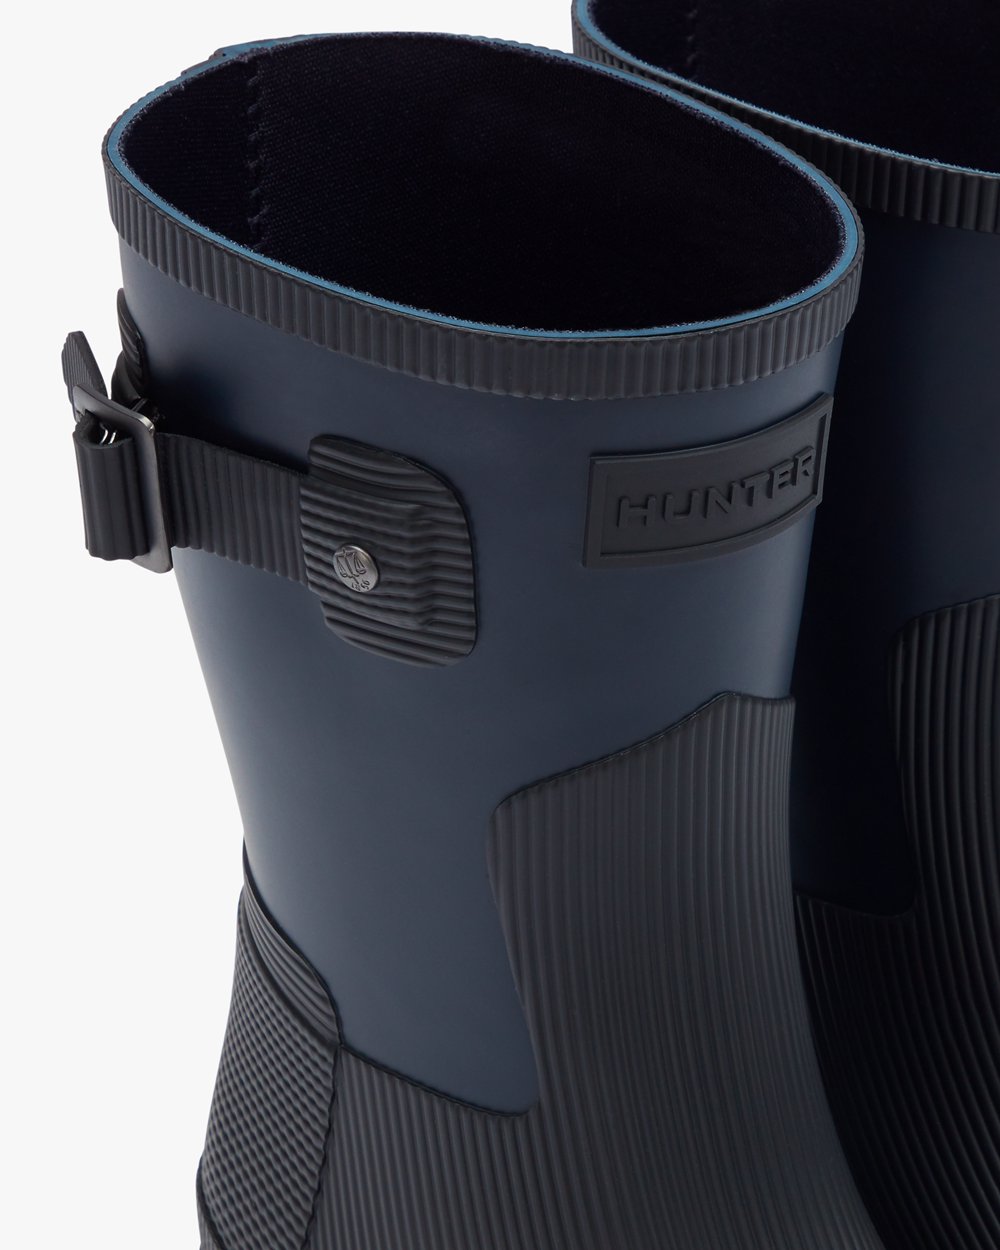 Womens Short Rain Boots - Hunter Refined Texture Block Slim Fit (18VLERAUC) - Navy/Black